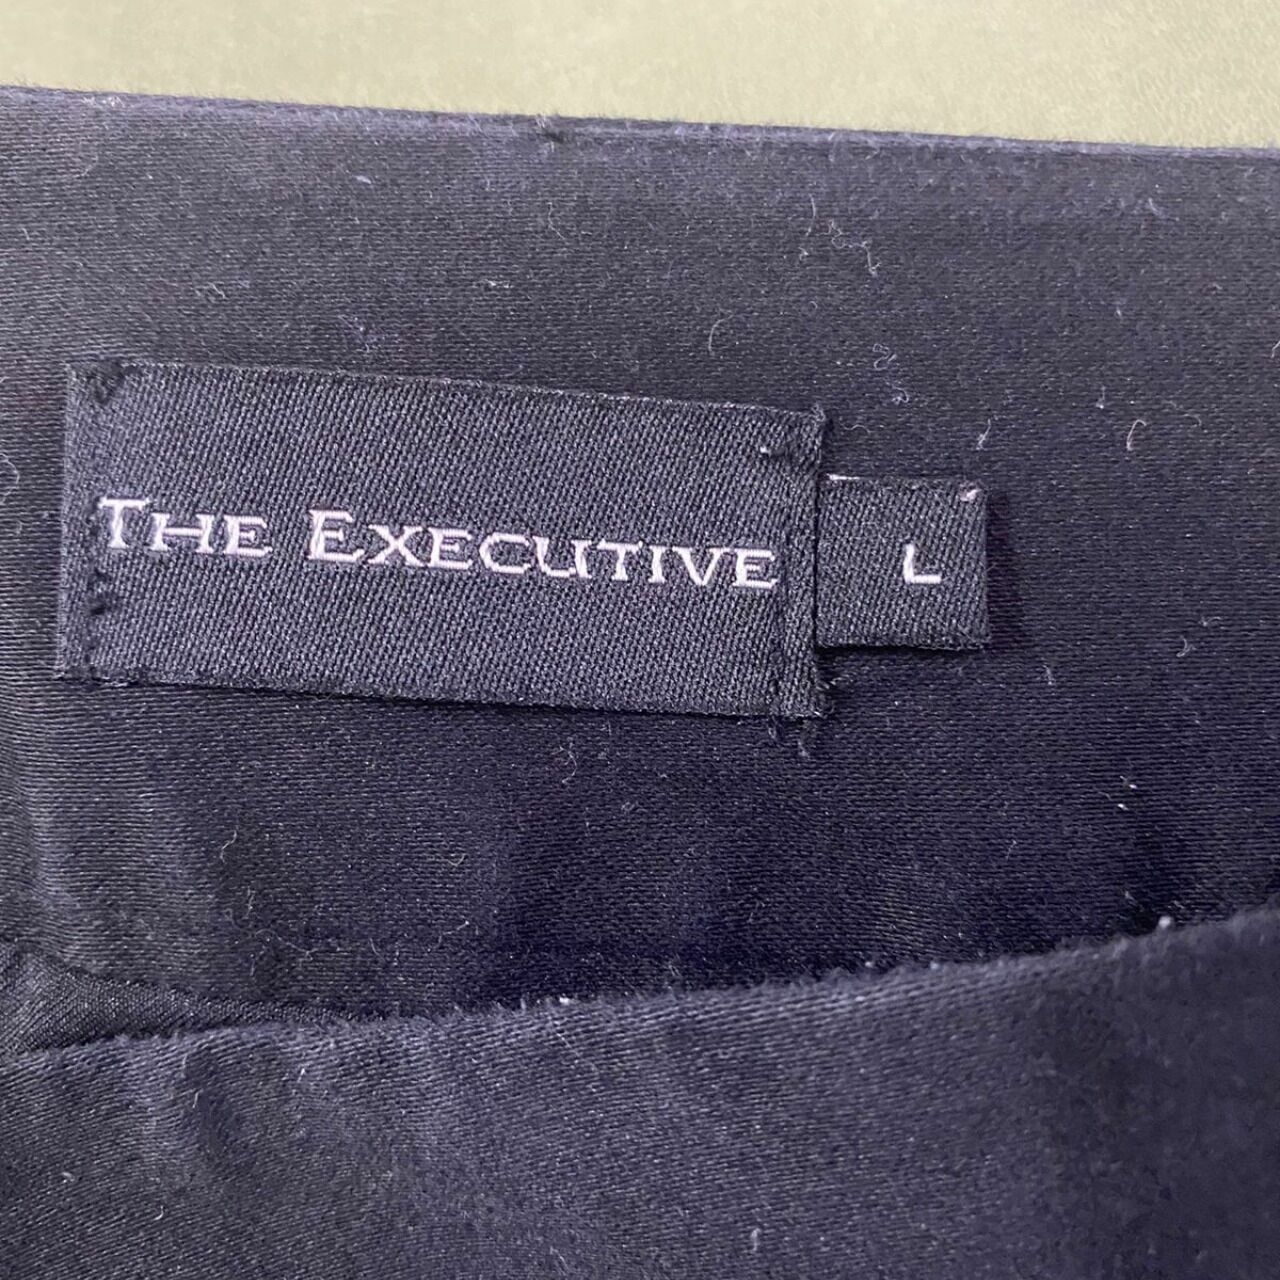 The Executive Black Midi Skirt